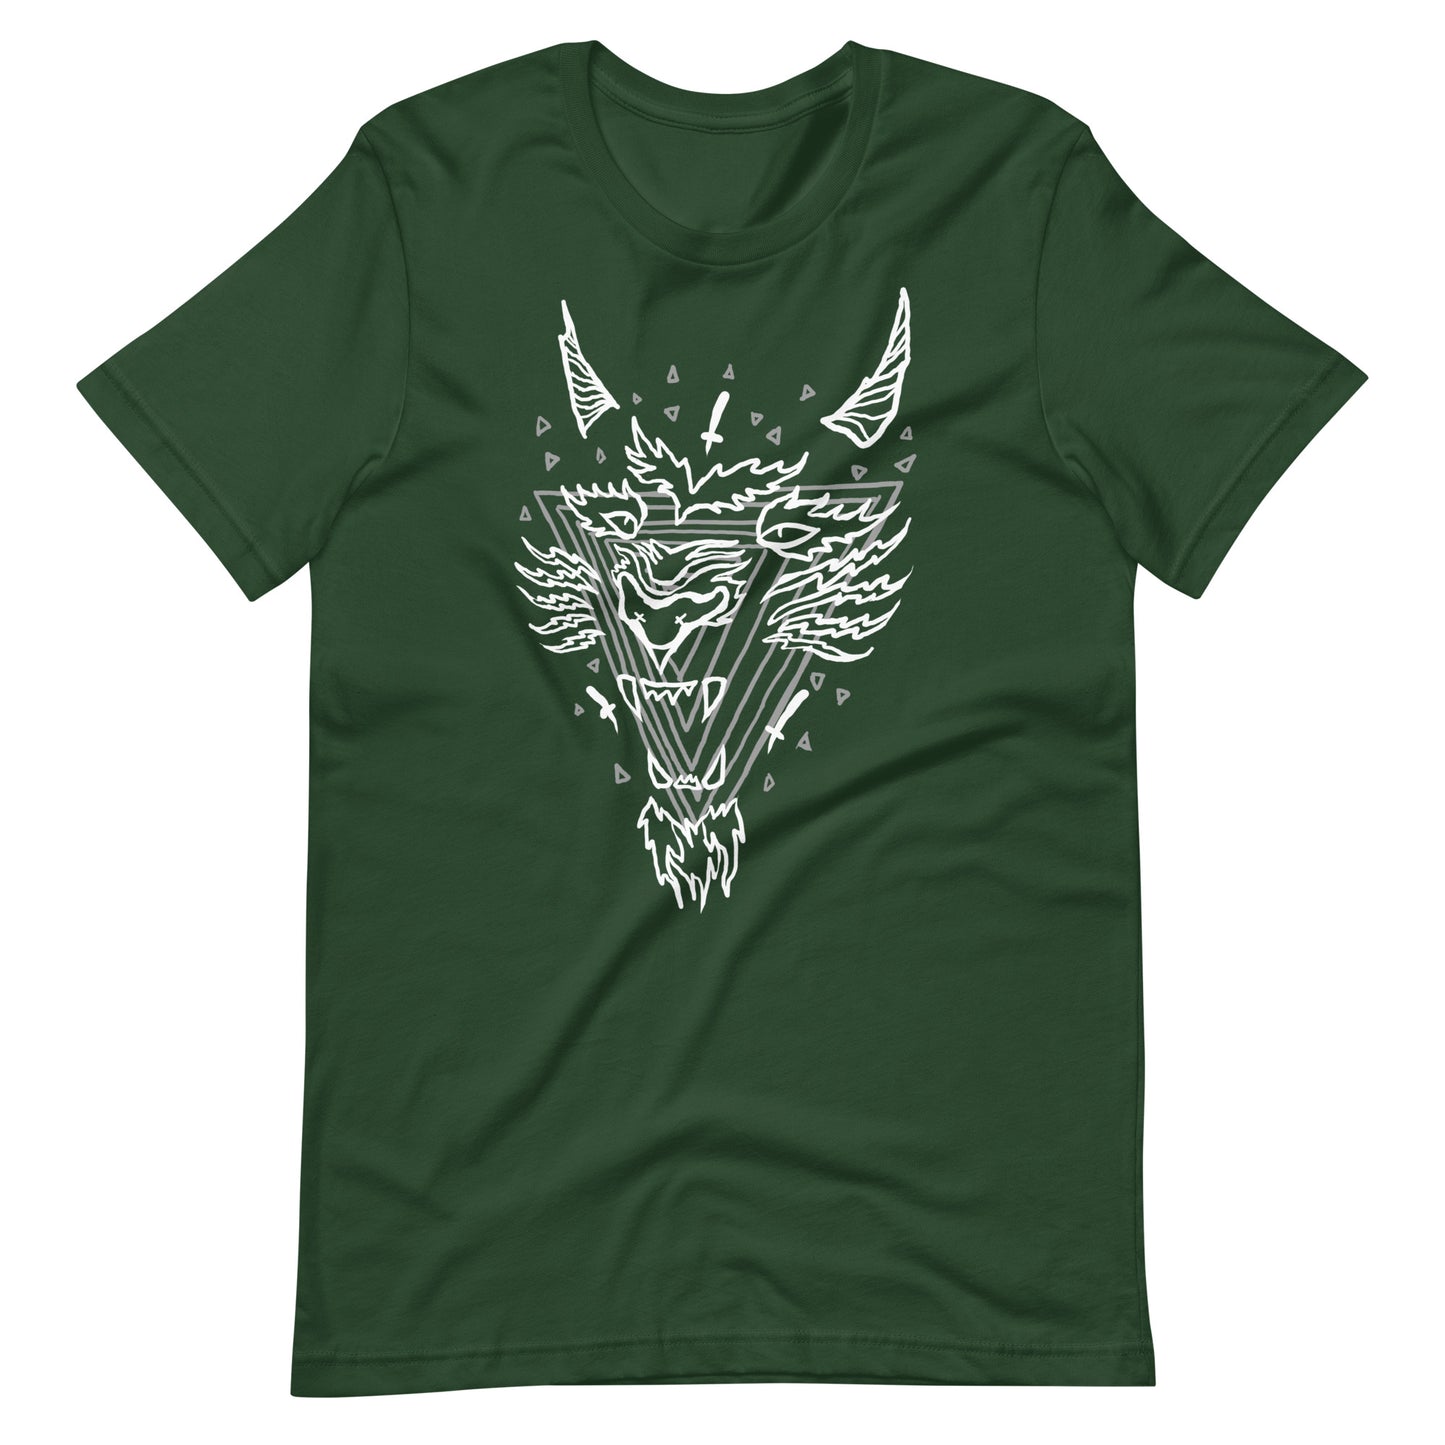 Violent - Men's t-shirt - Forest Front